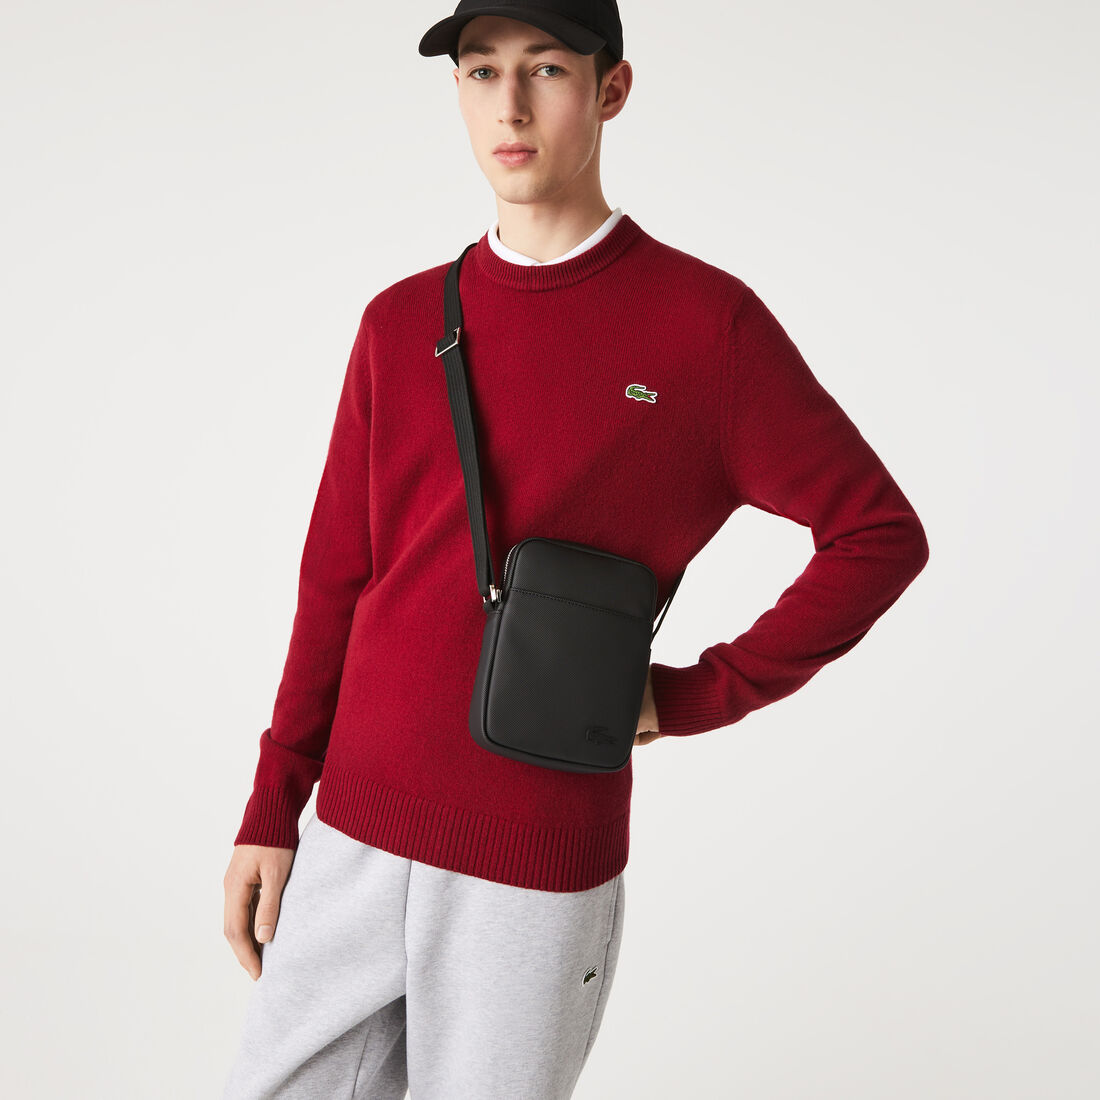 Men's Classic Petit Piqué Vertical Zip Bag